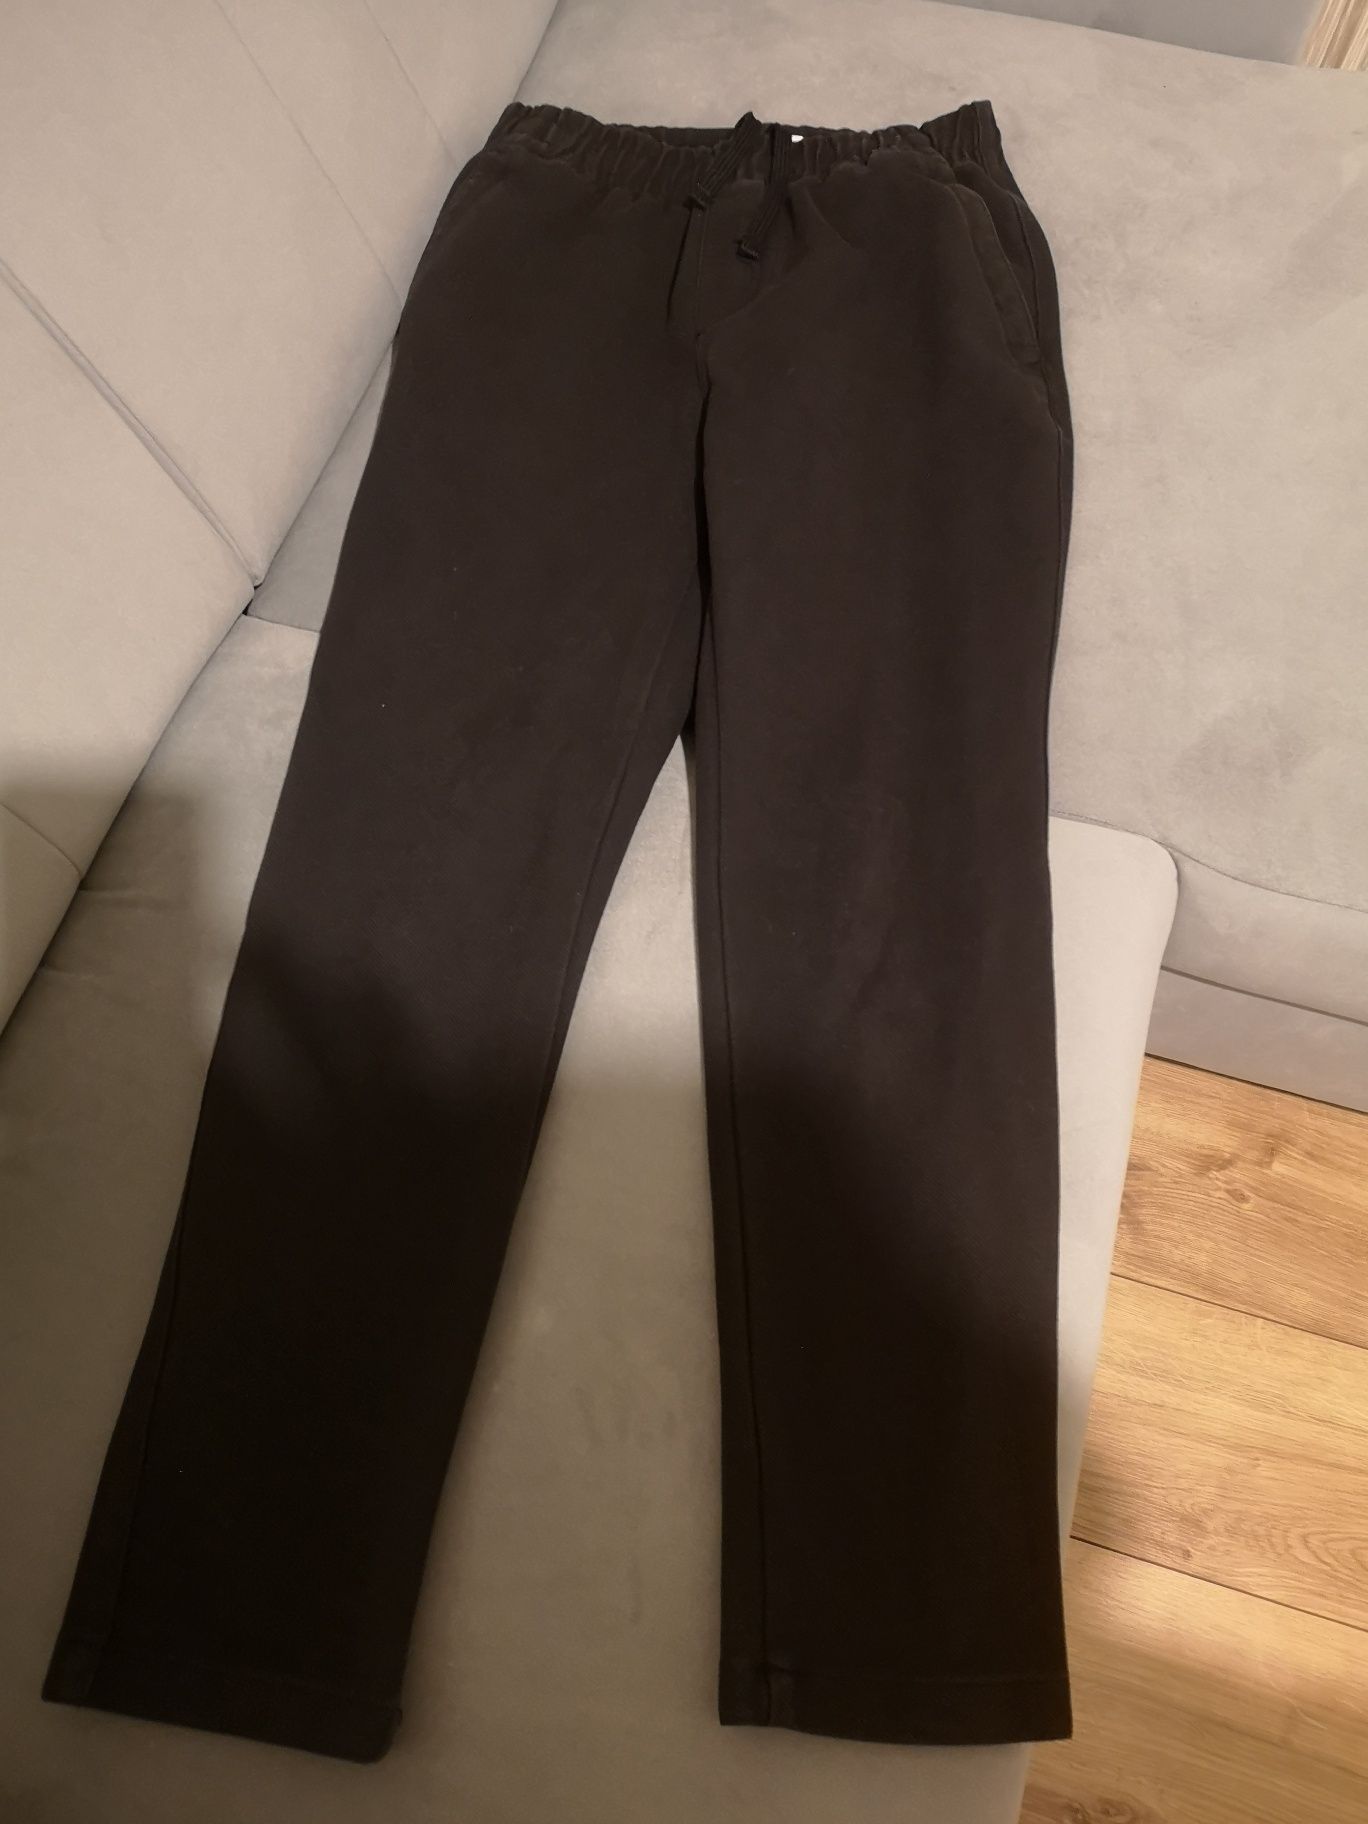 Spodnie garniturowe eleganckie r. S Zara 158